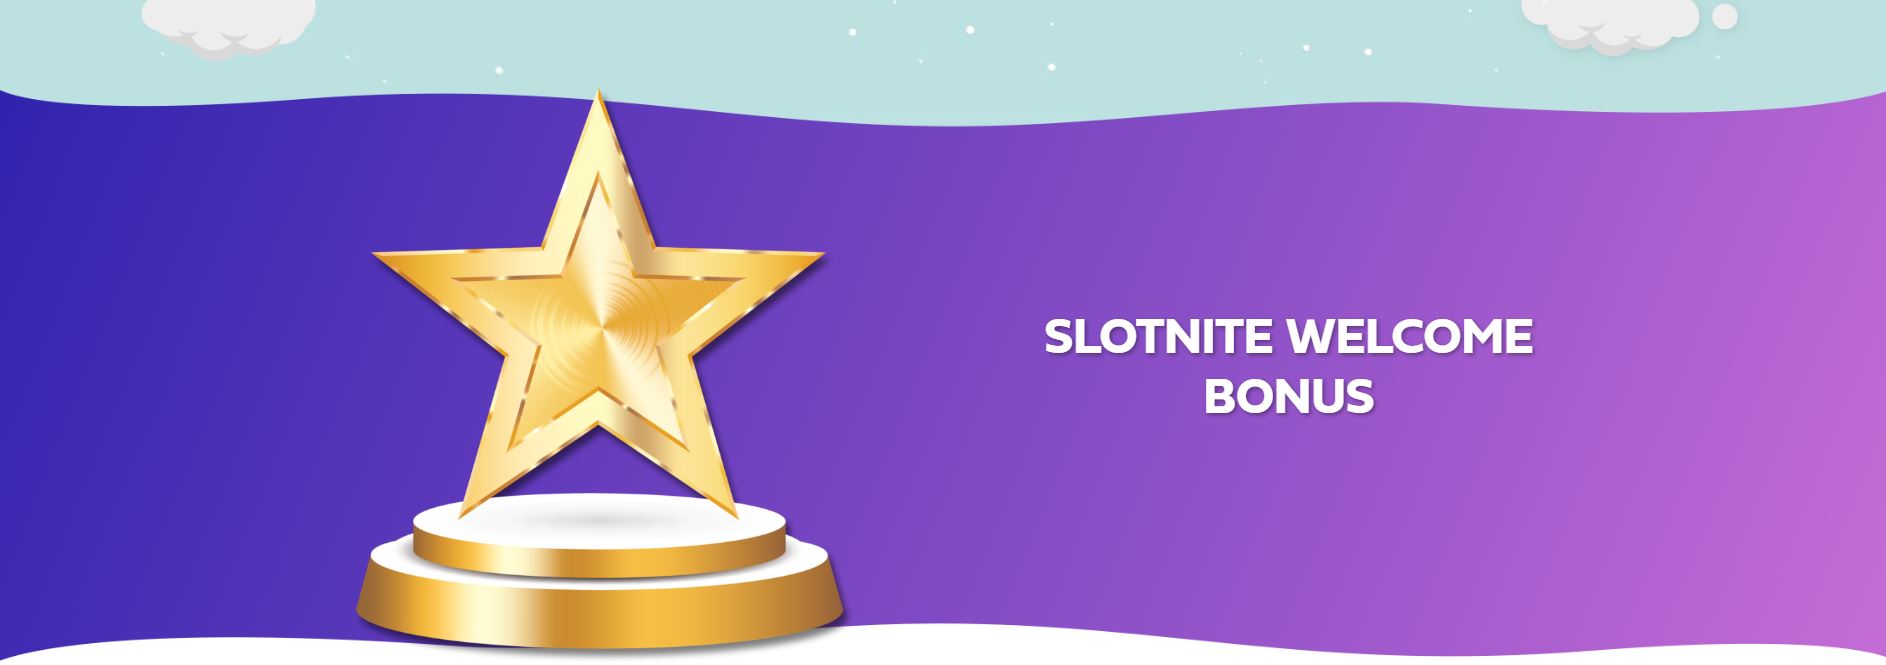 Welcome bonus page at Slotnite